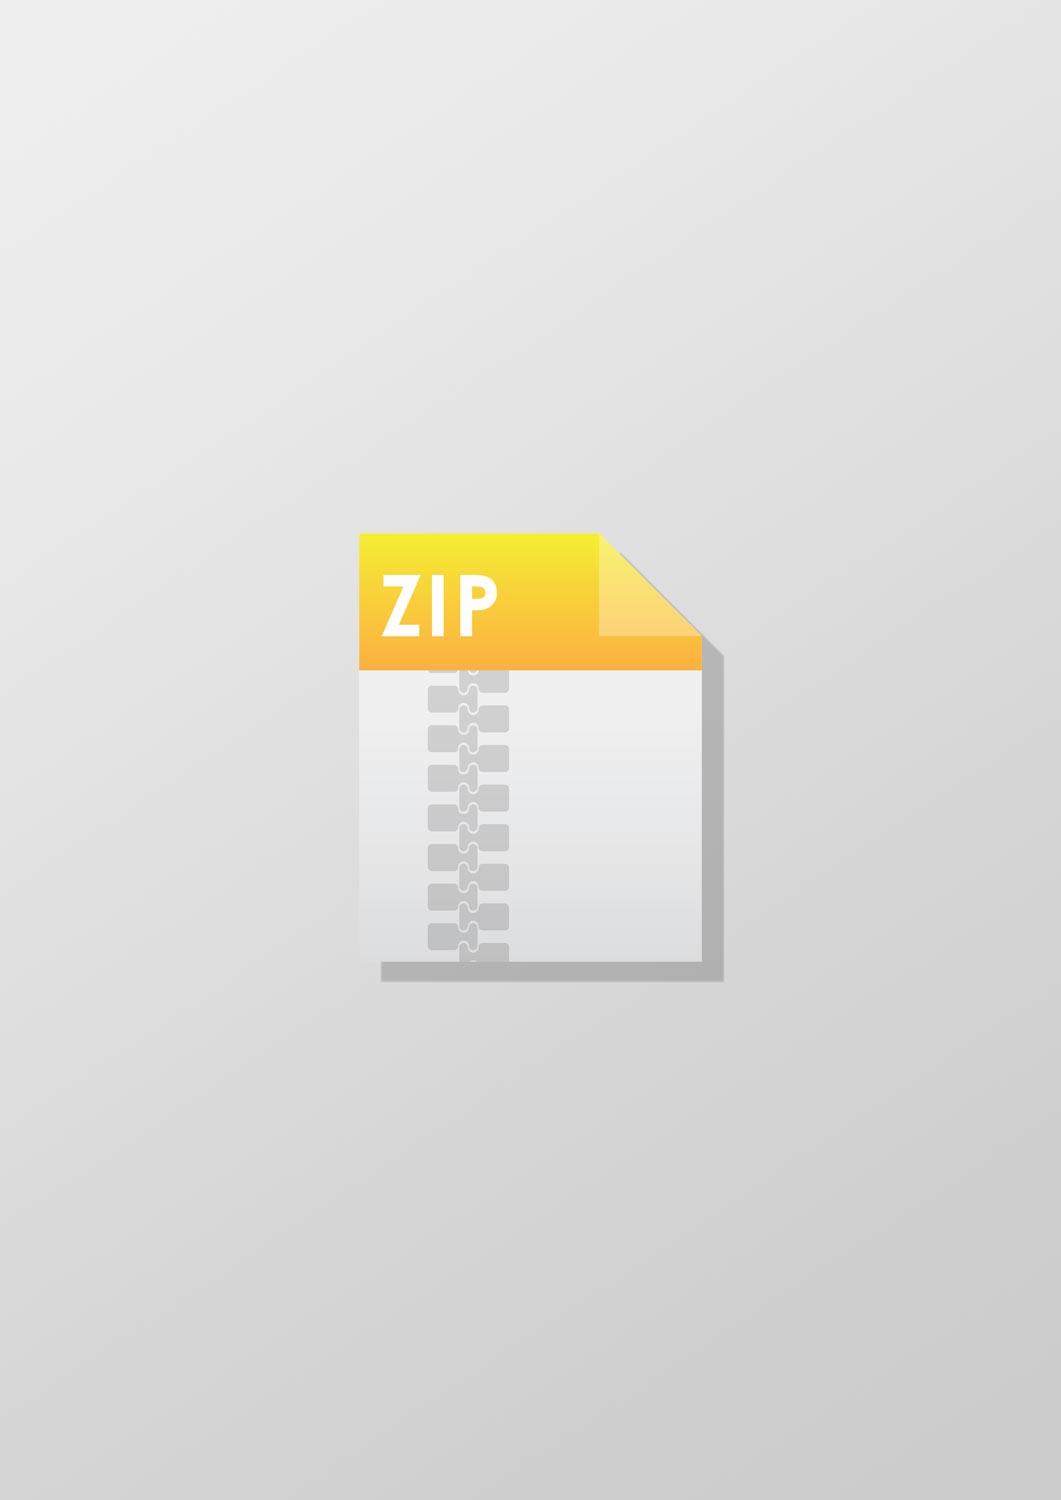 ZIP File Icon Image